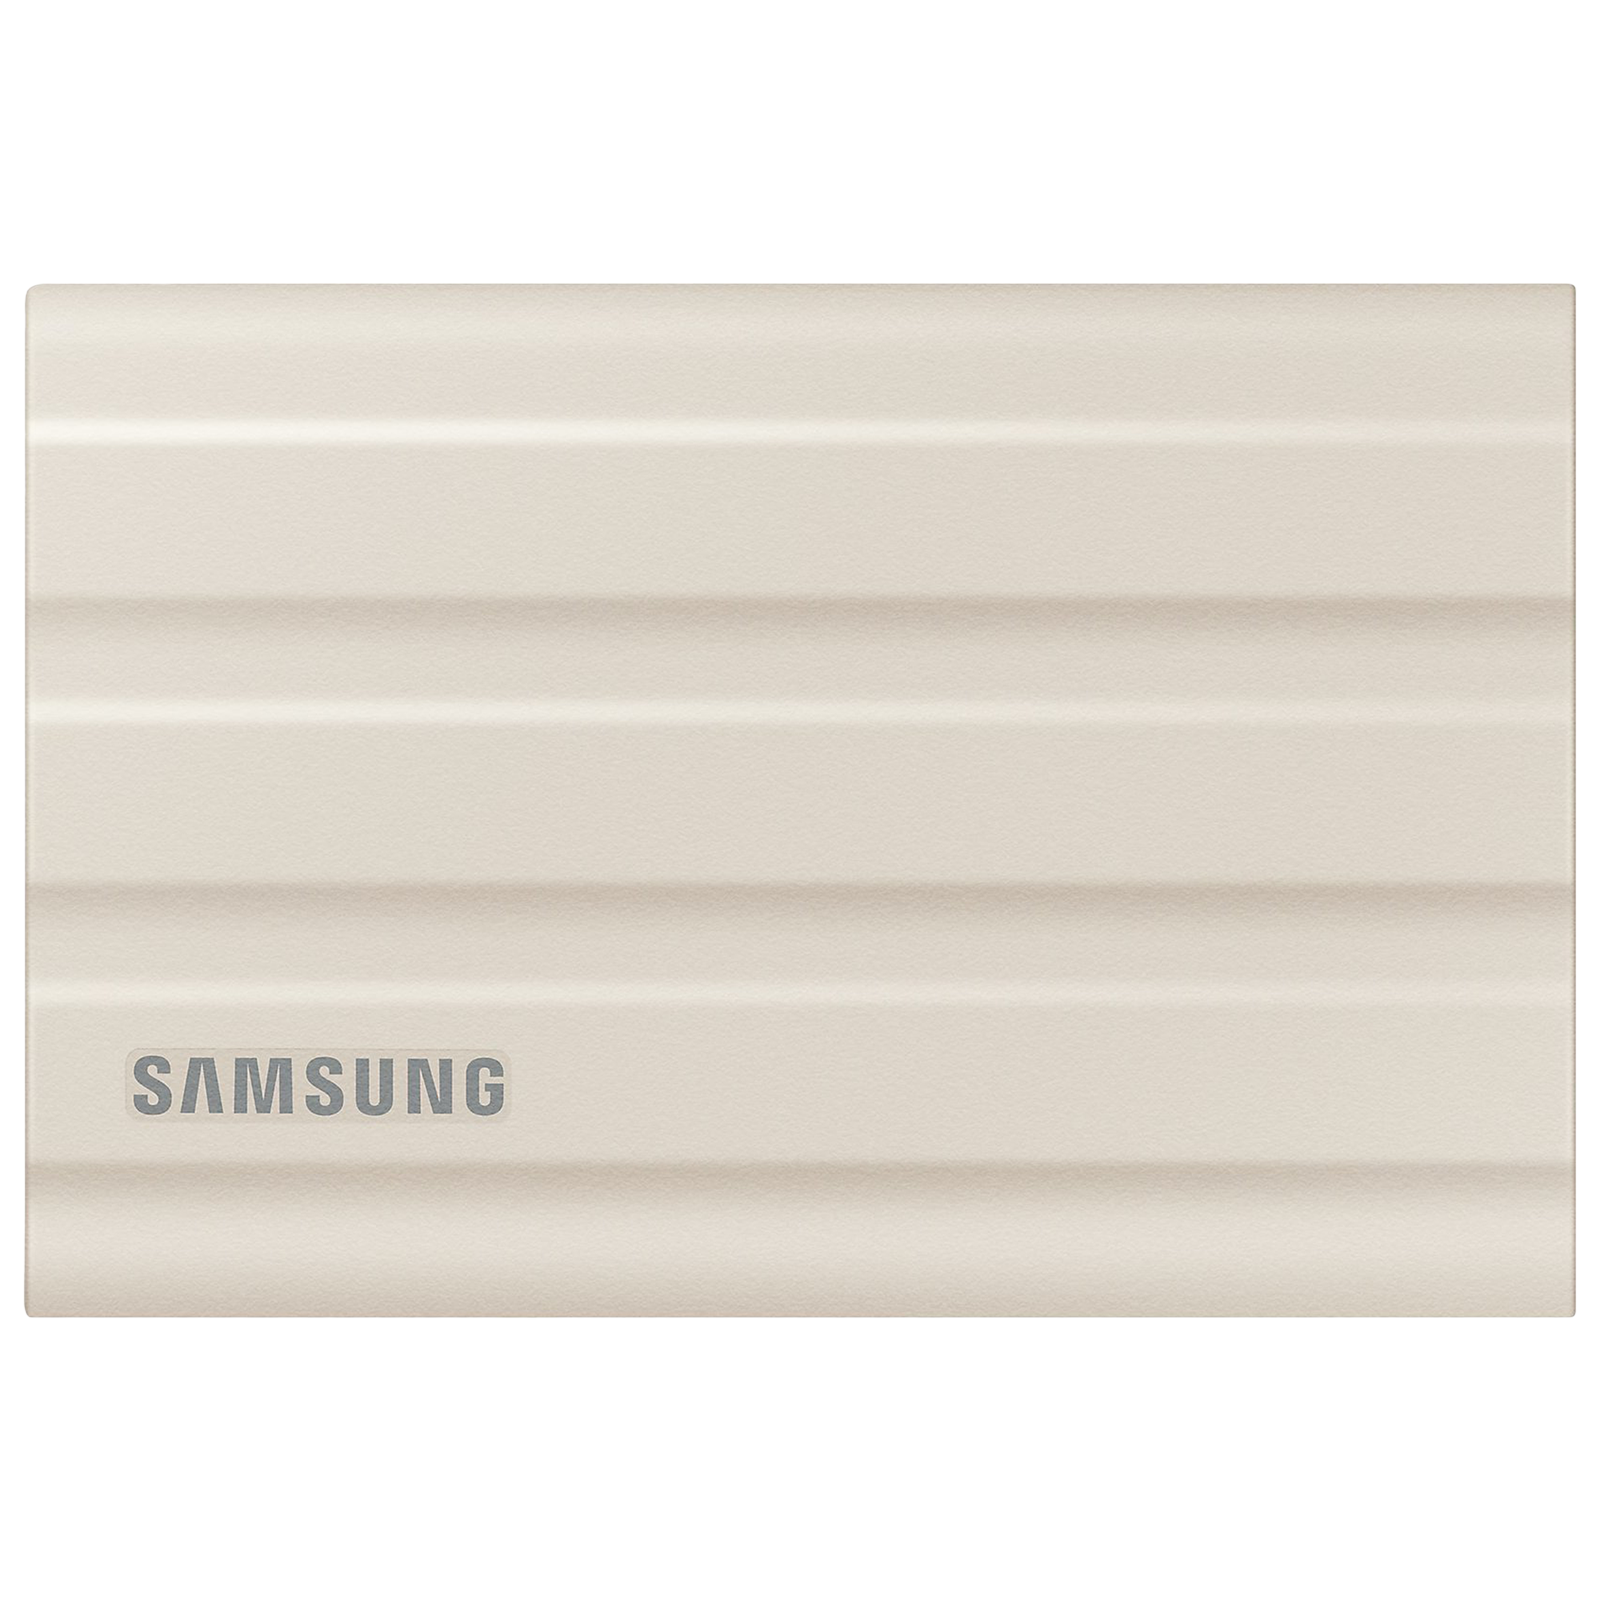 Buy Samsung T7 1 TB USB 3.2 Solid State Drive (UASP Mode, MU-PC1T0H/WW,  Indigo Blue) Online - Croma